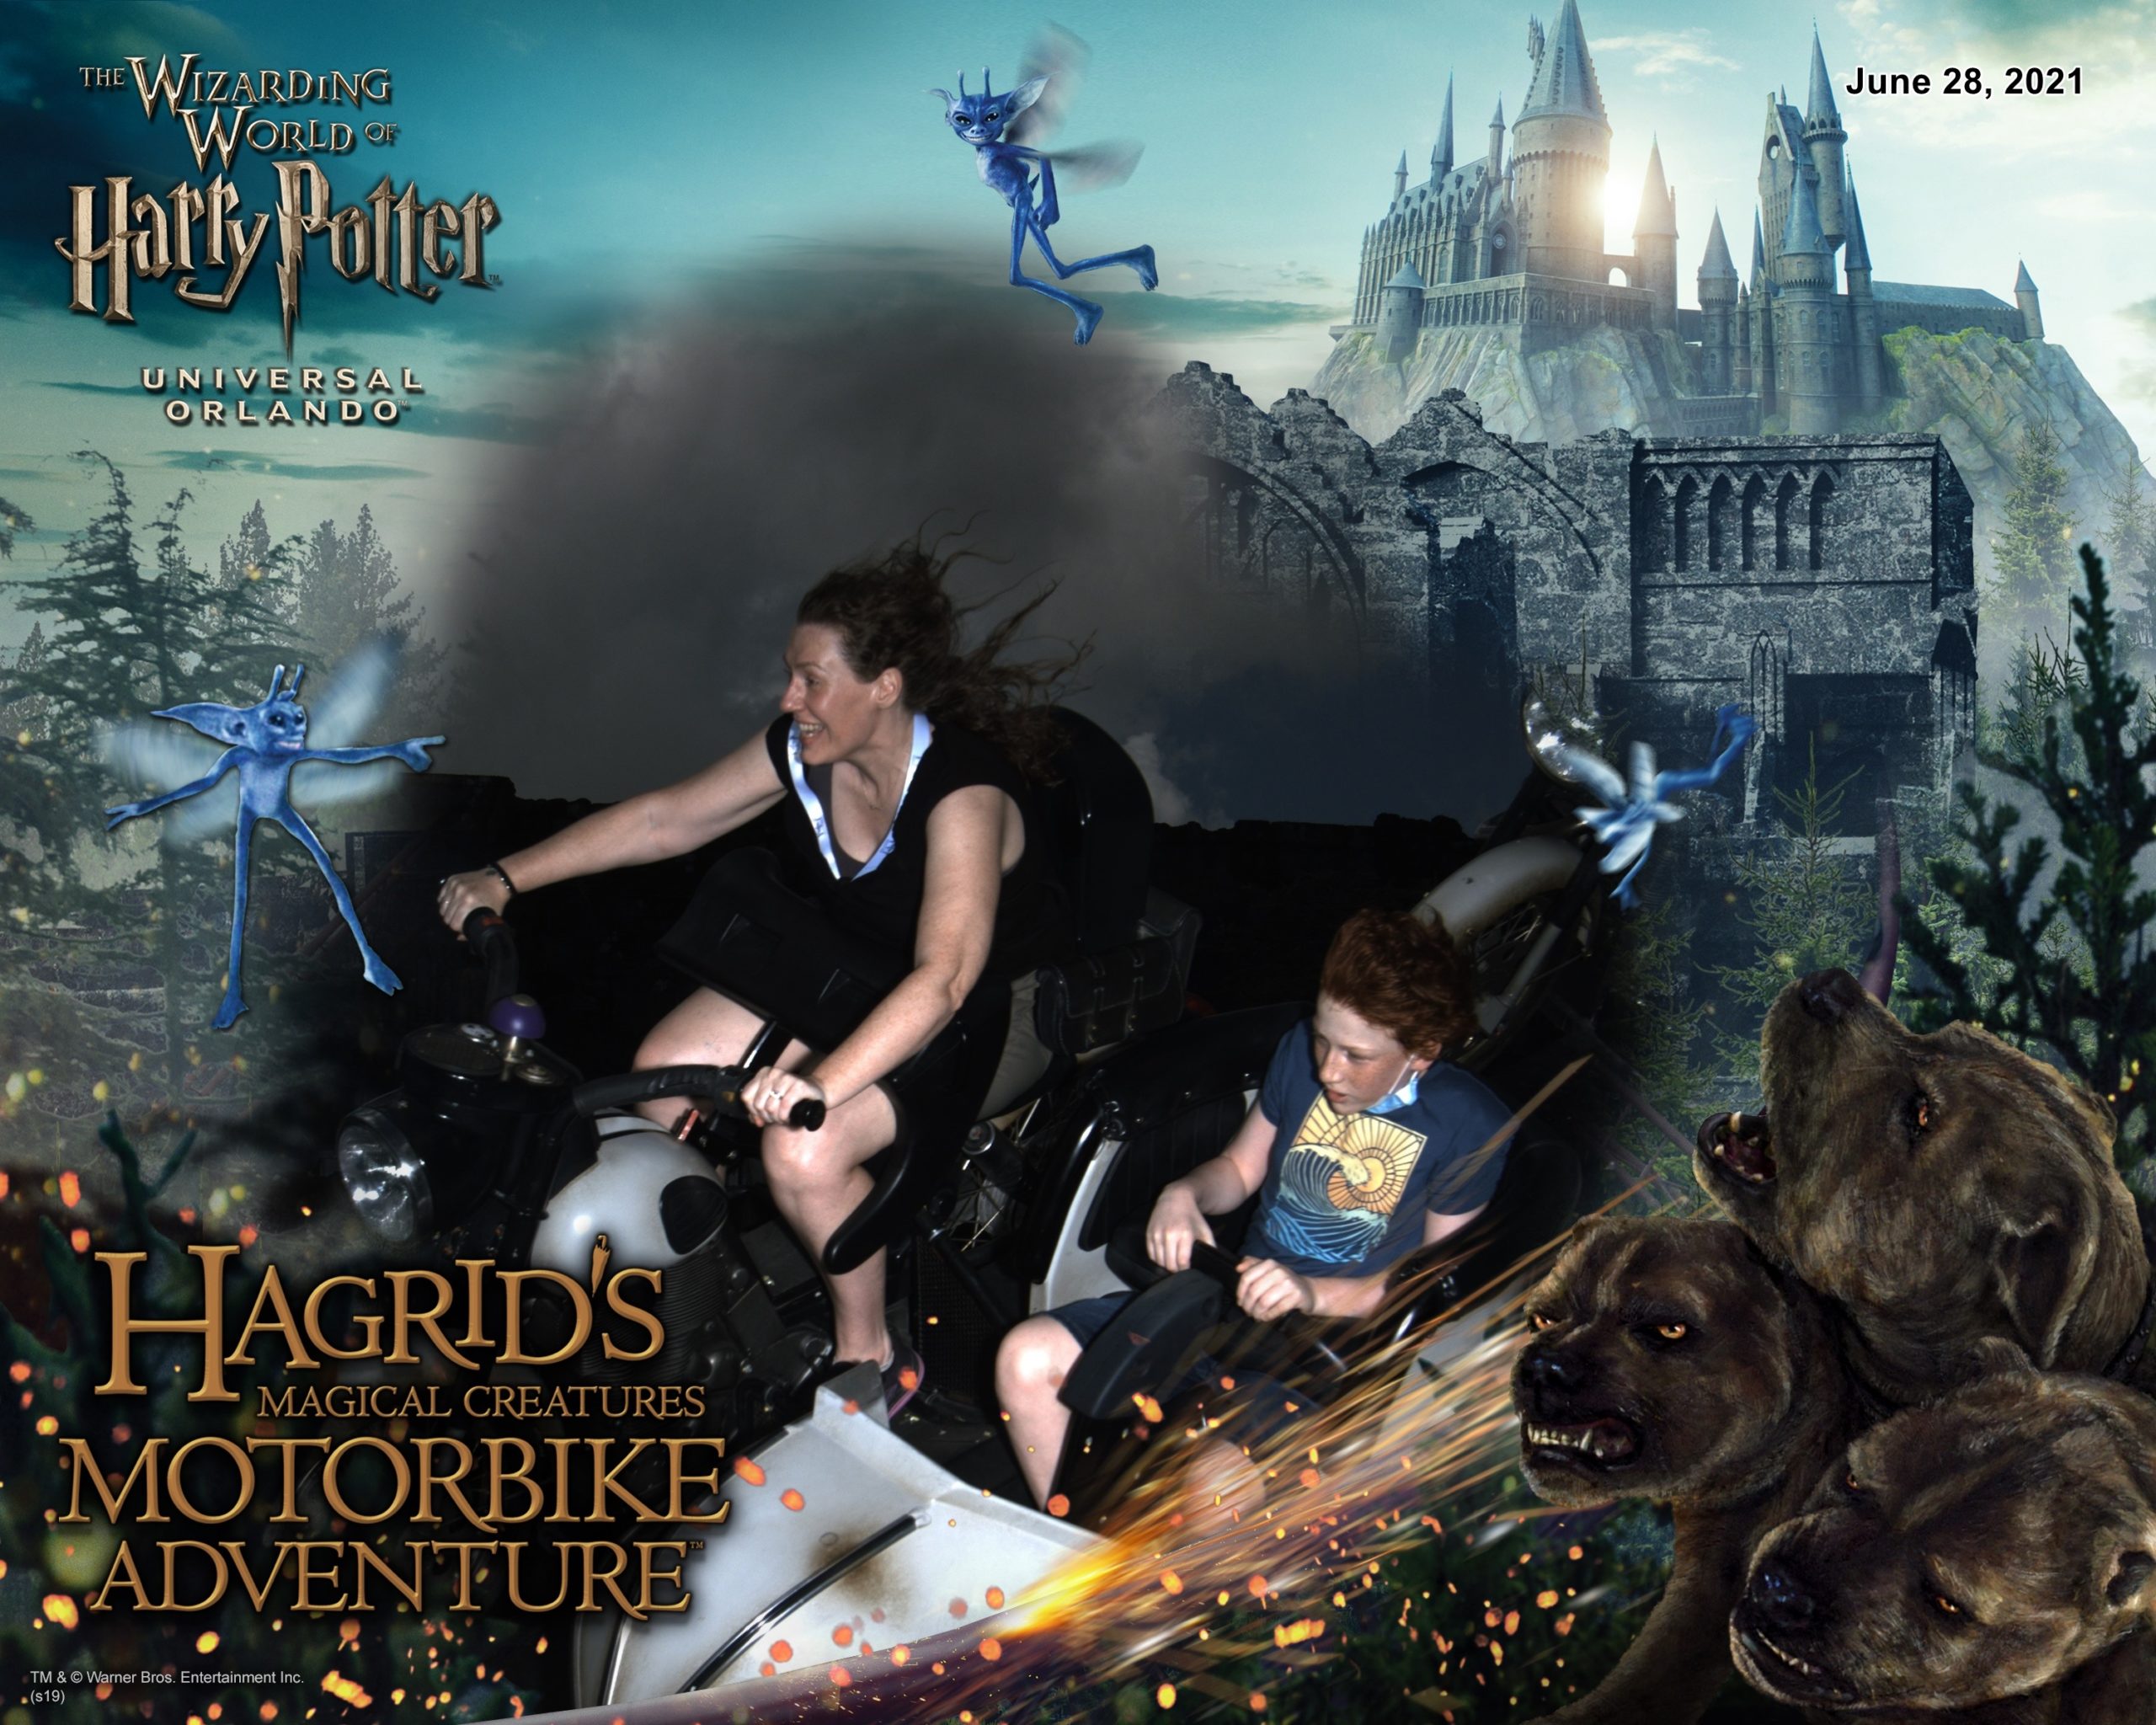 Hagrid's ride photo